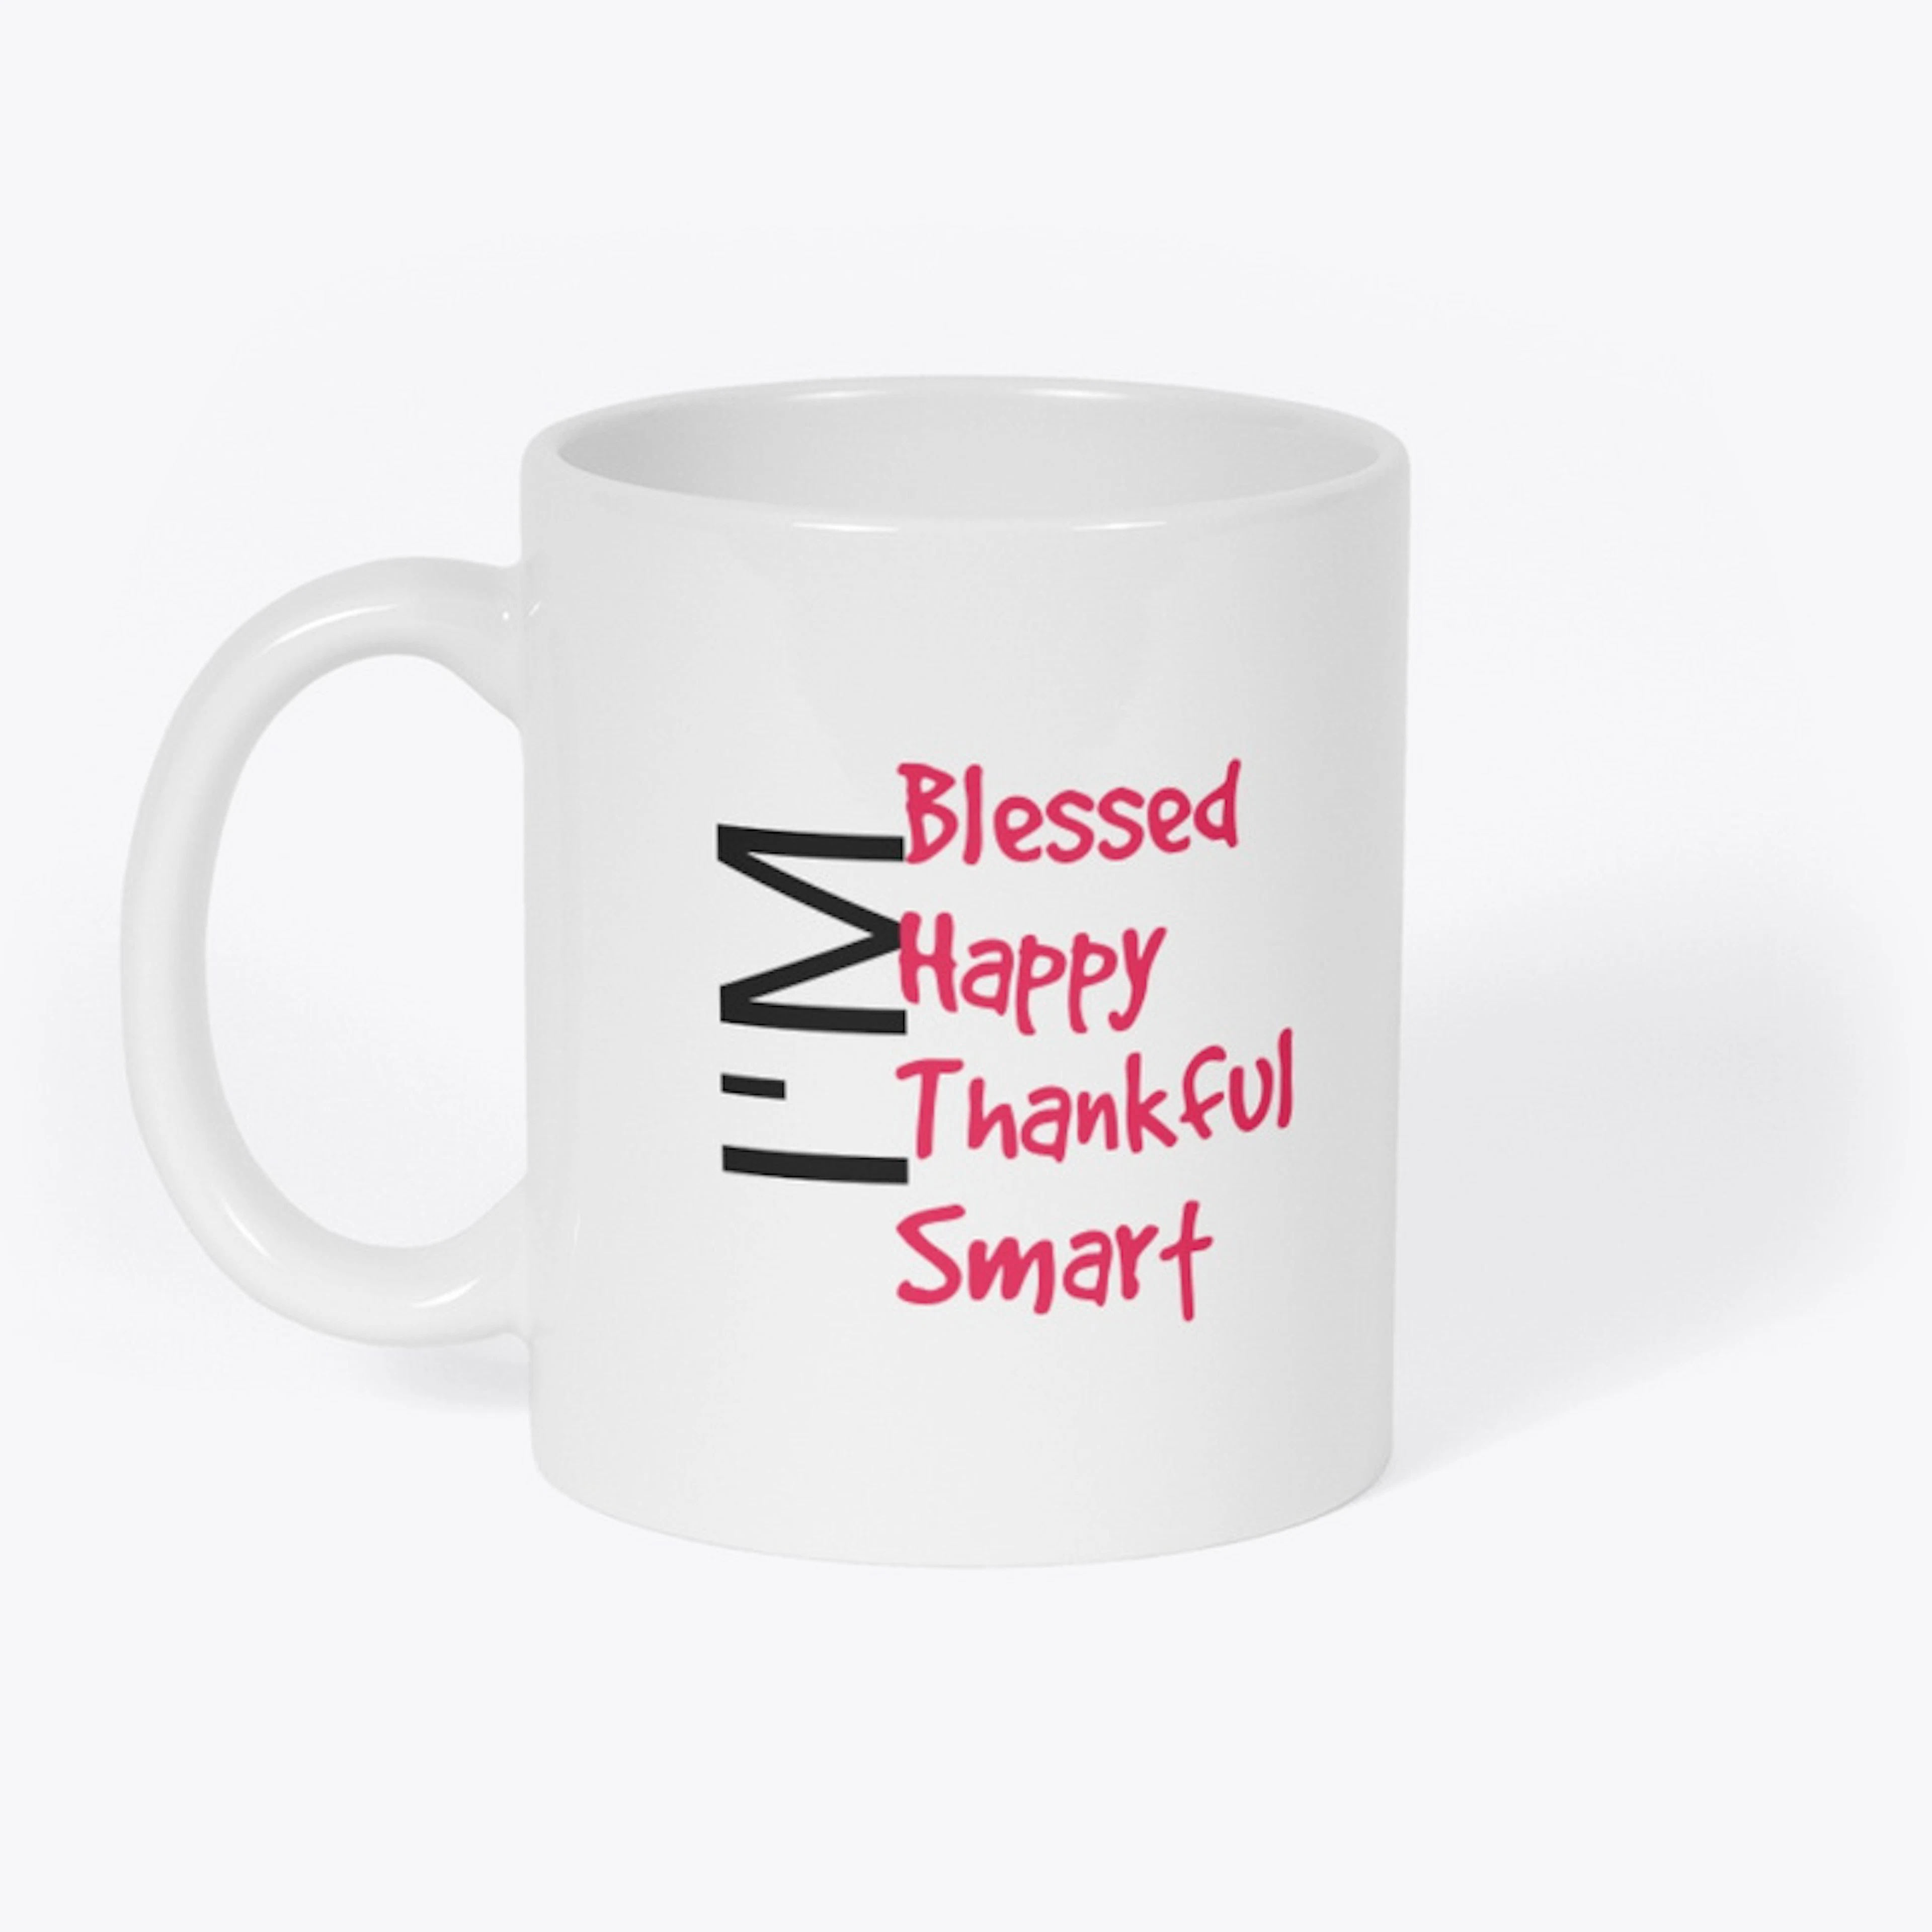 I'm blessed happy thankful smart, Mug